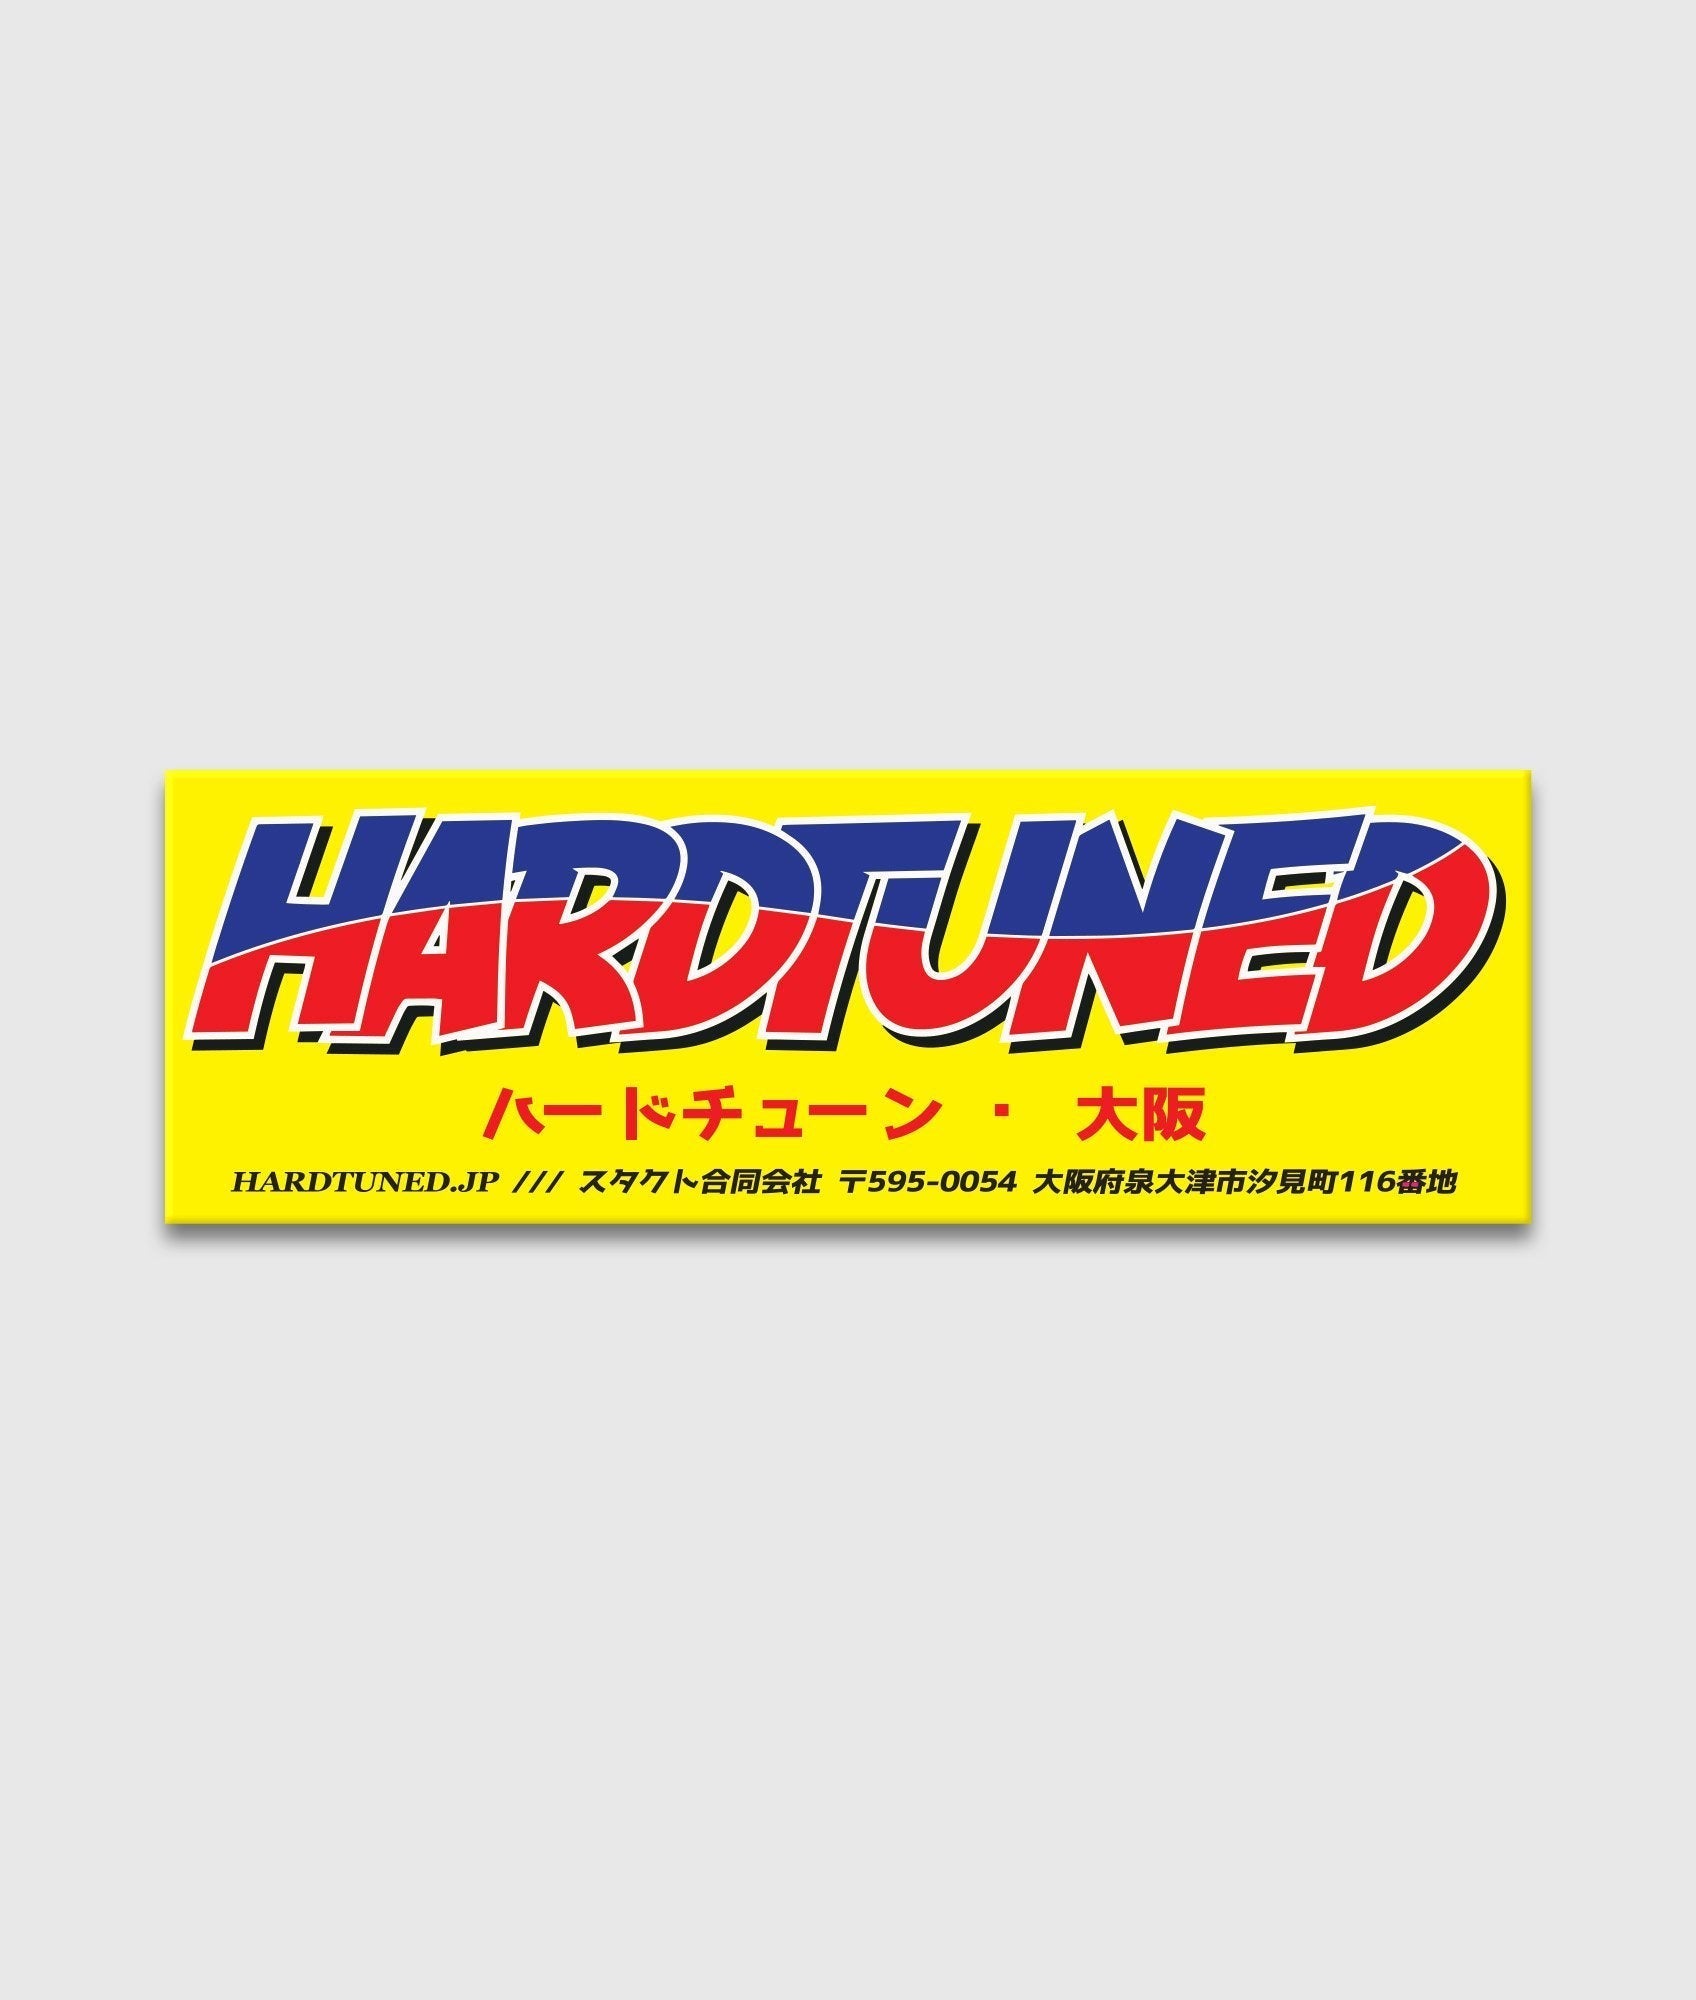 Hardtuned Garage Vinyl Sticker - Hardtuned